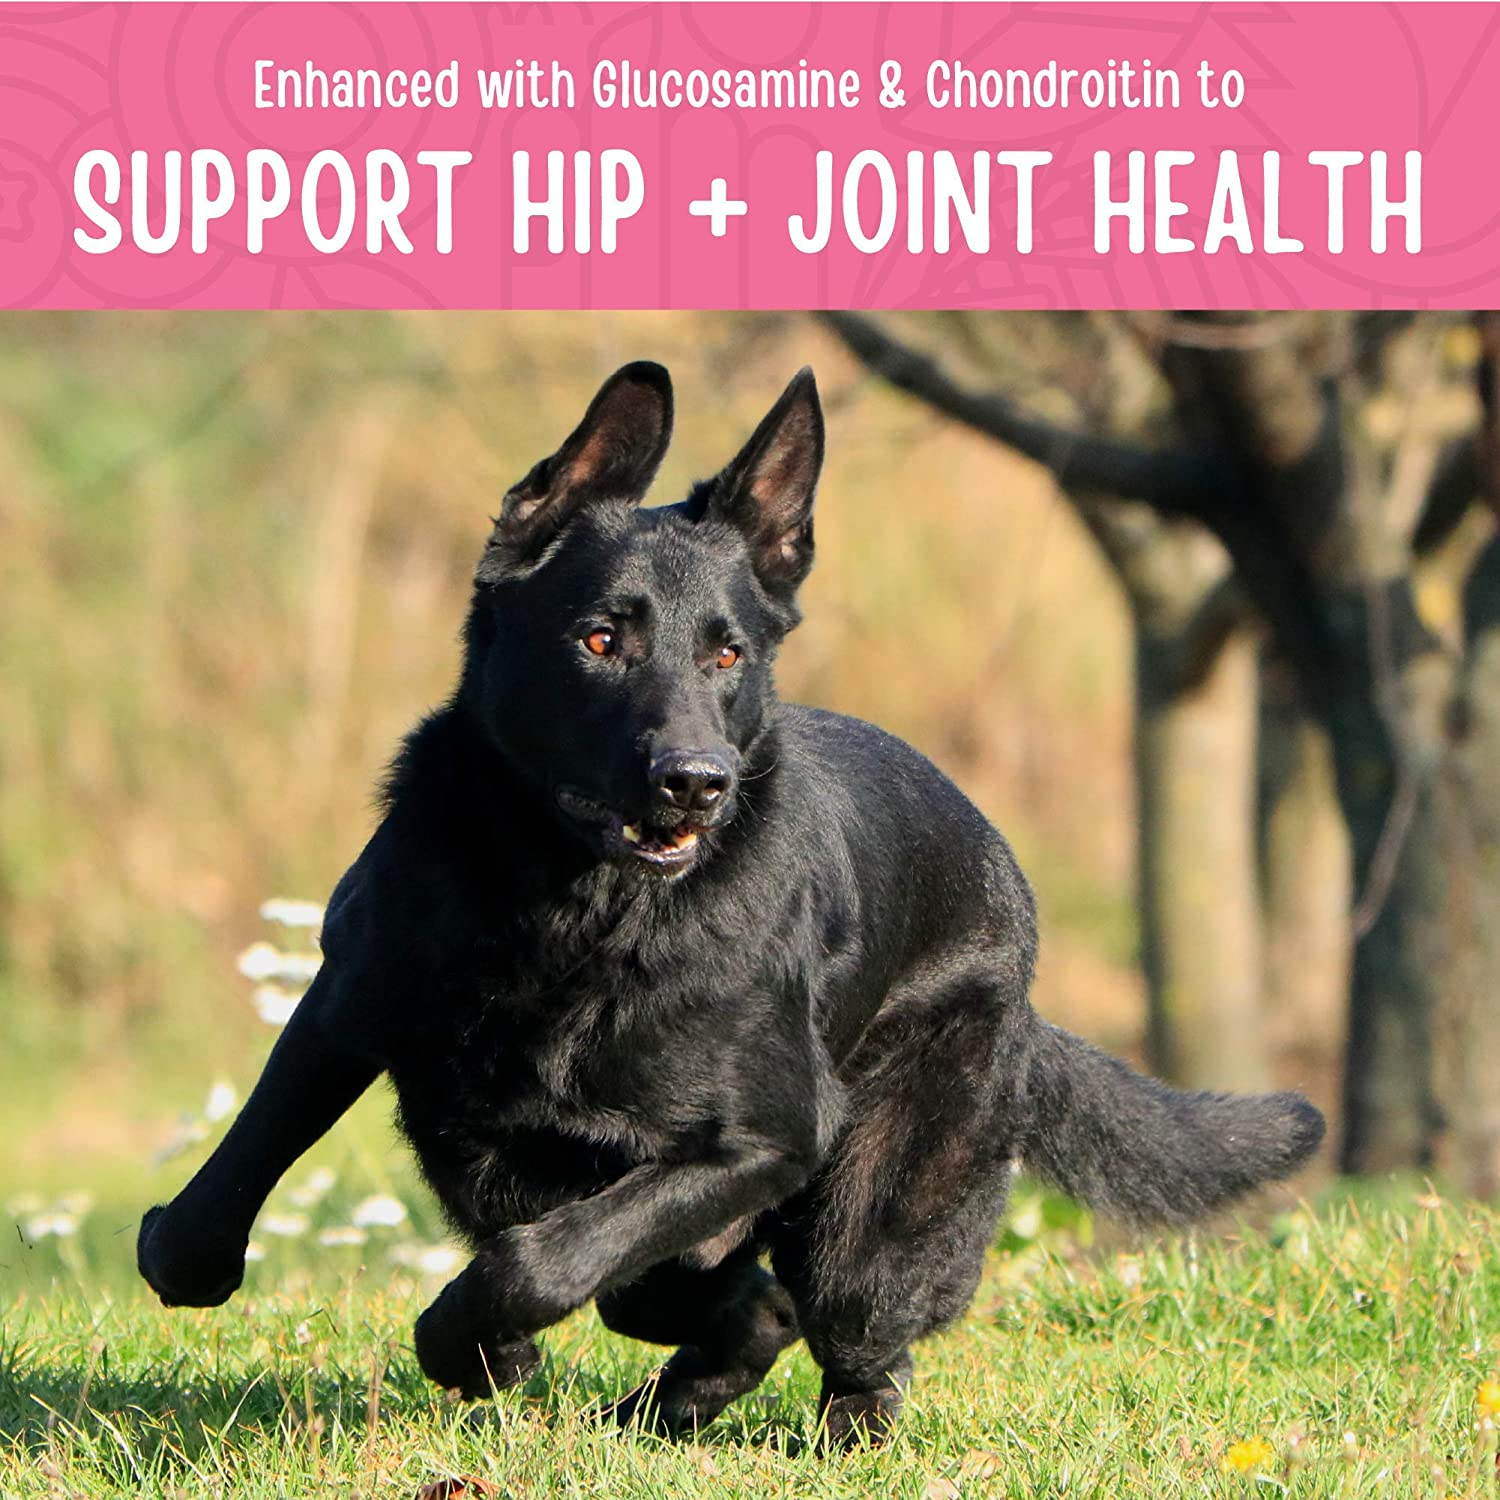 All Natural Human Grade Dog Treats for Hip & Joint Health